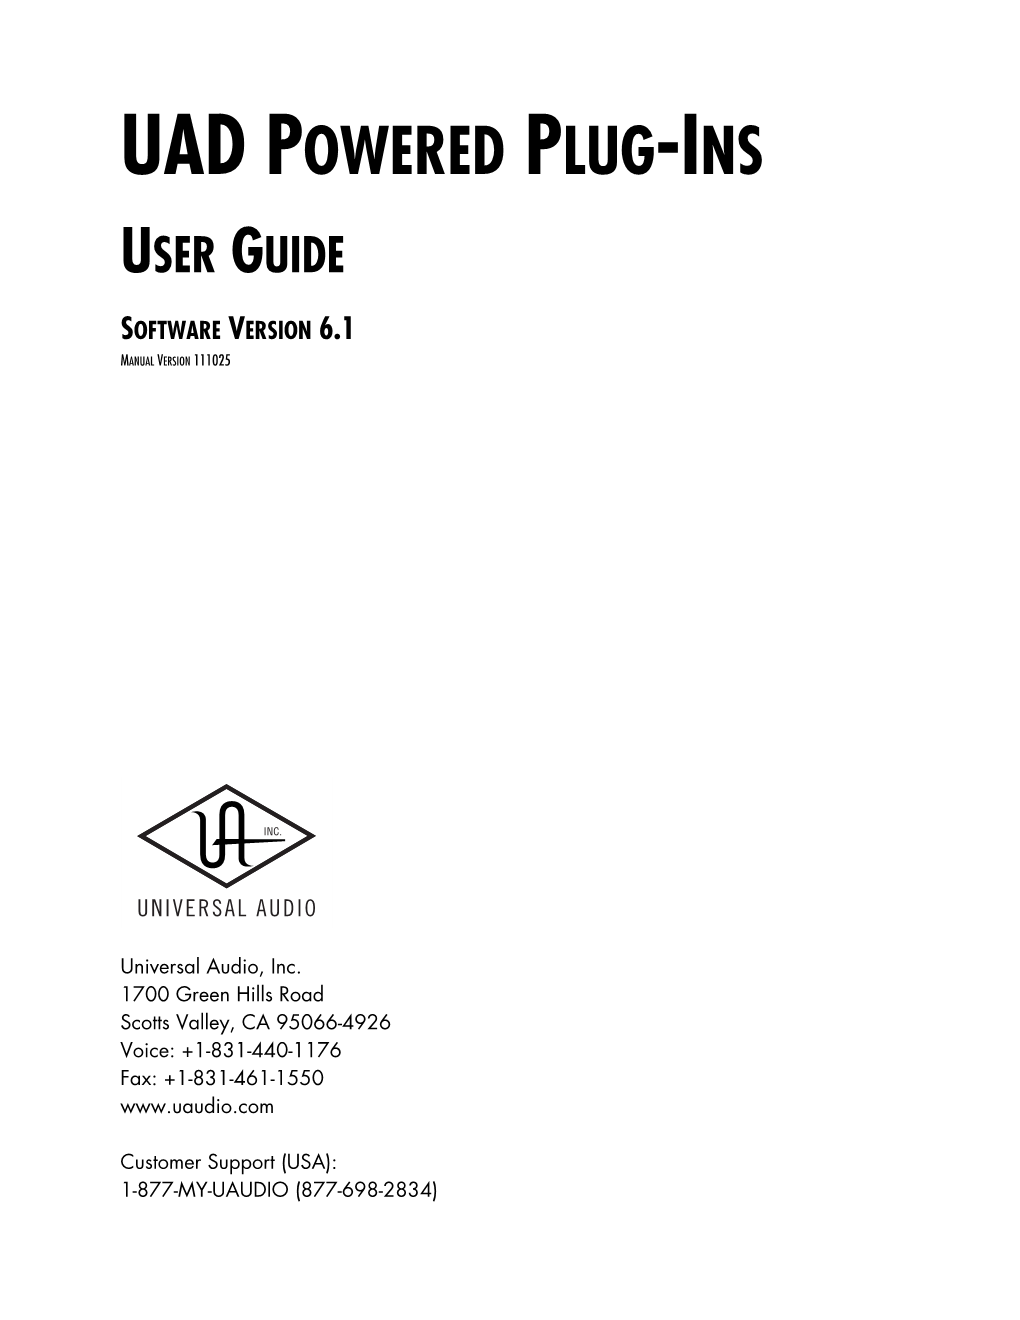 UAD Powered Plug-Ins Manual V6.1